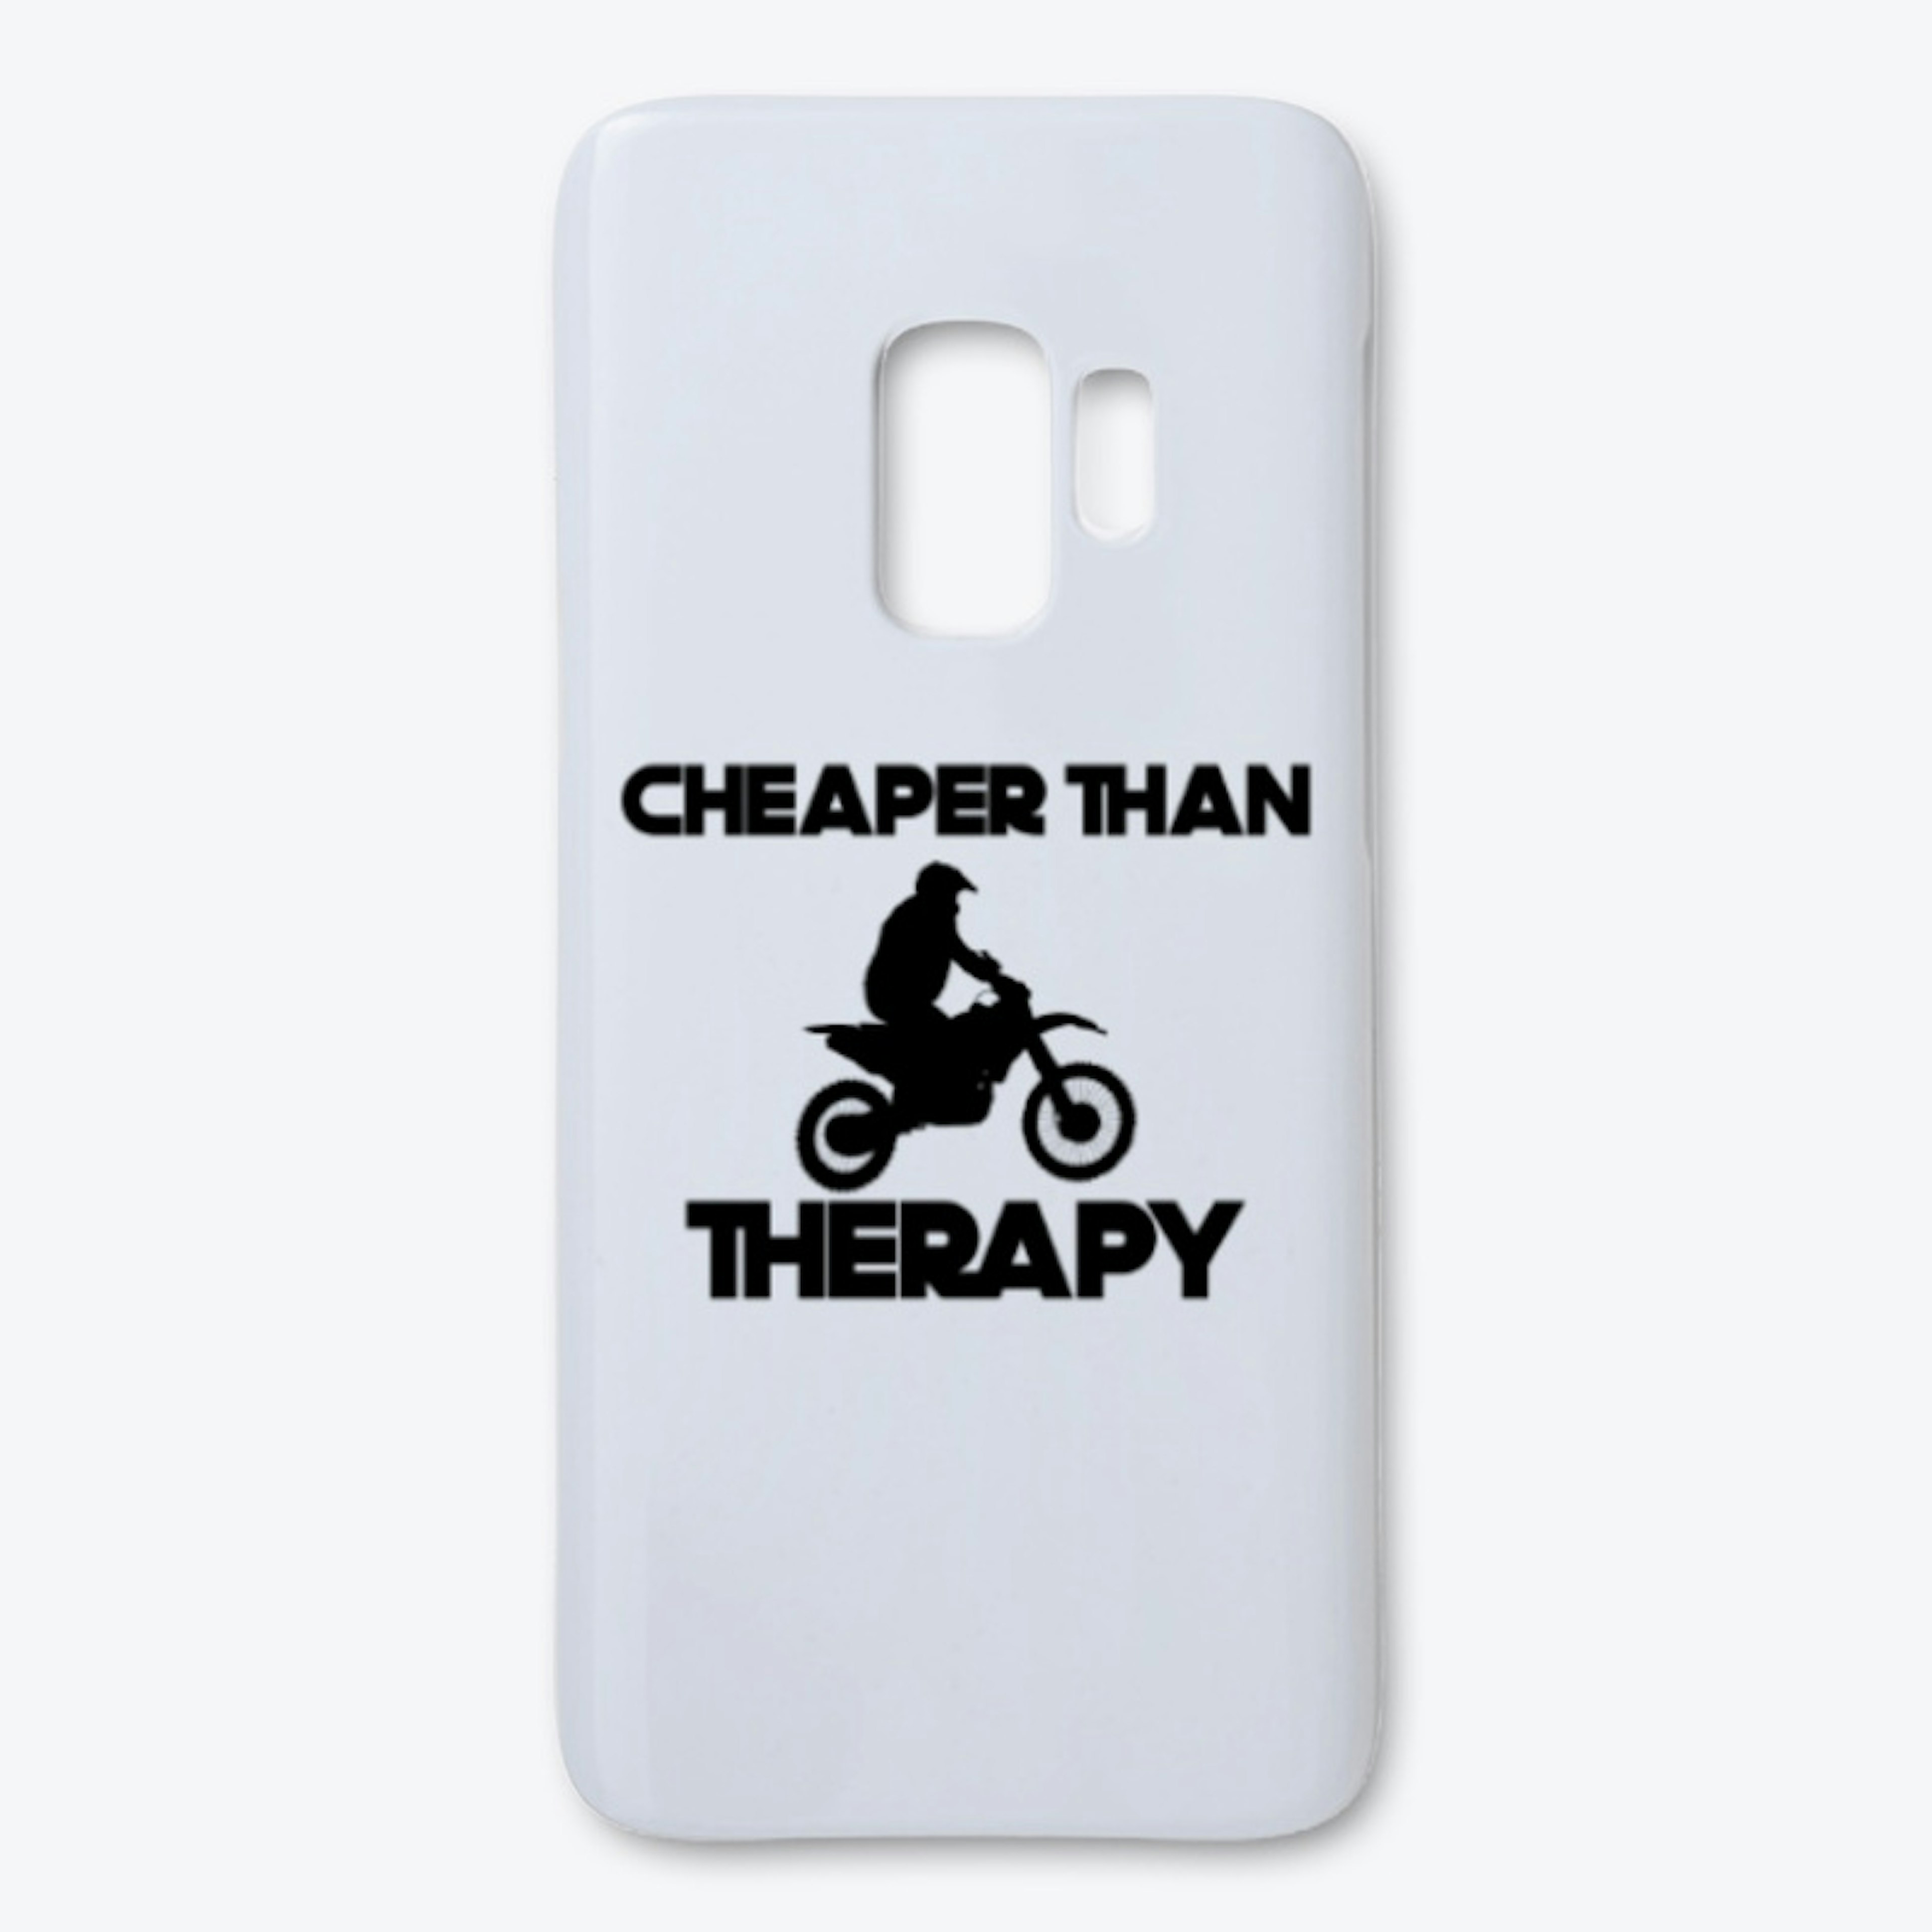 Dirt Biking is Cheaper Than Therapy